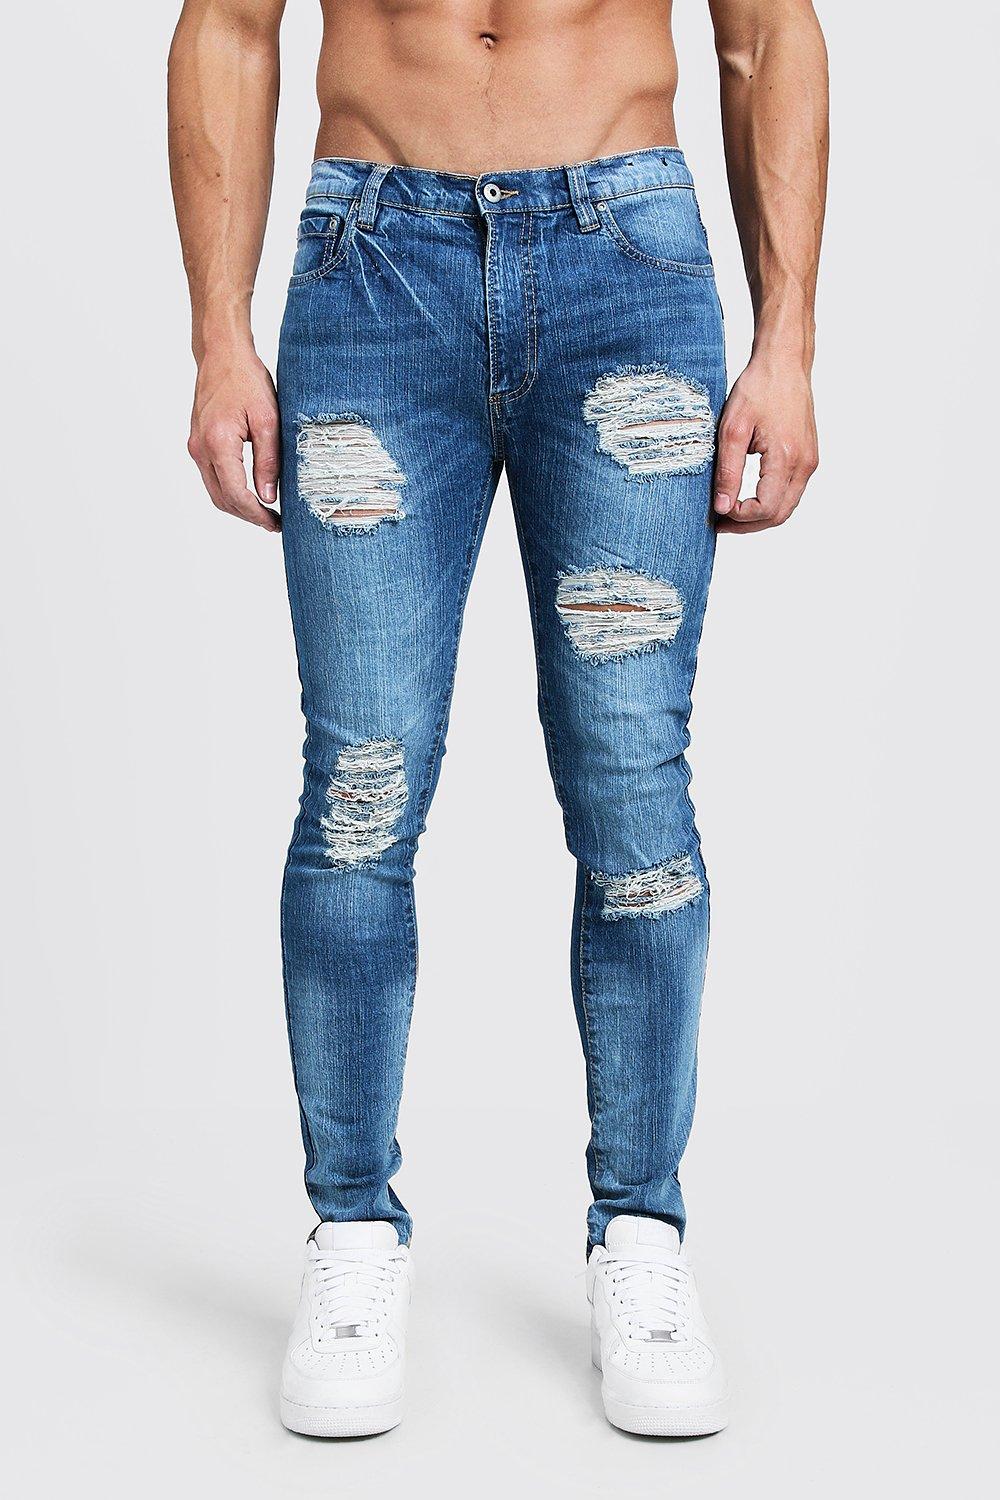 boohooman skinny jeans